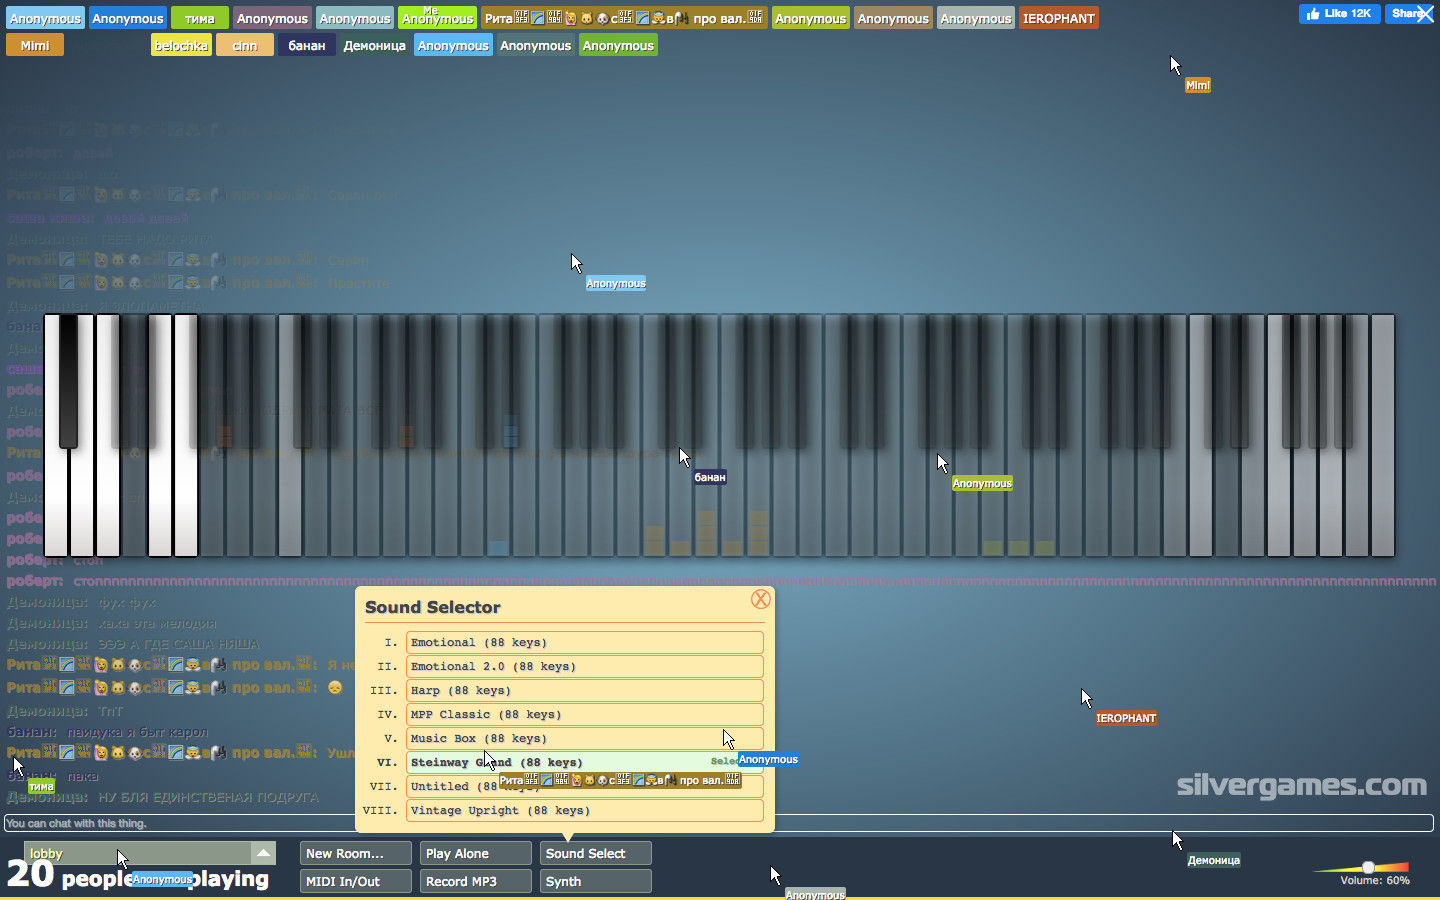 ☁multiplayer piano [online!] #games - TurboWarp